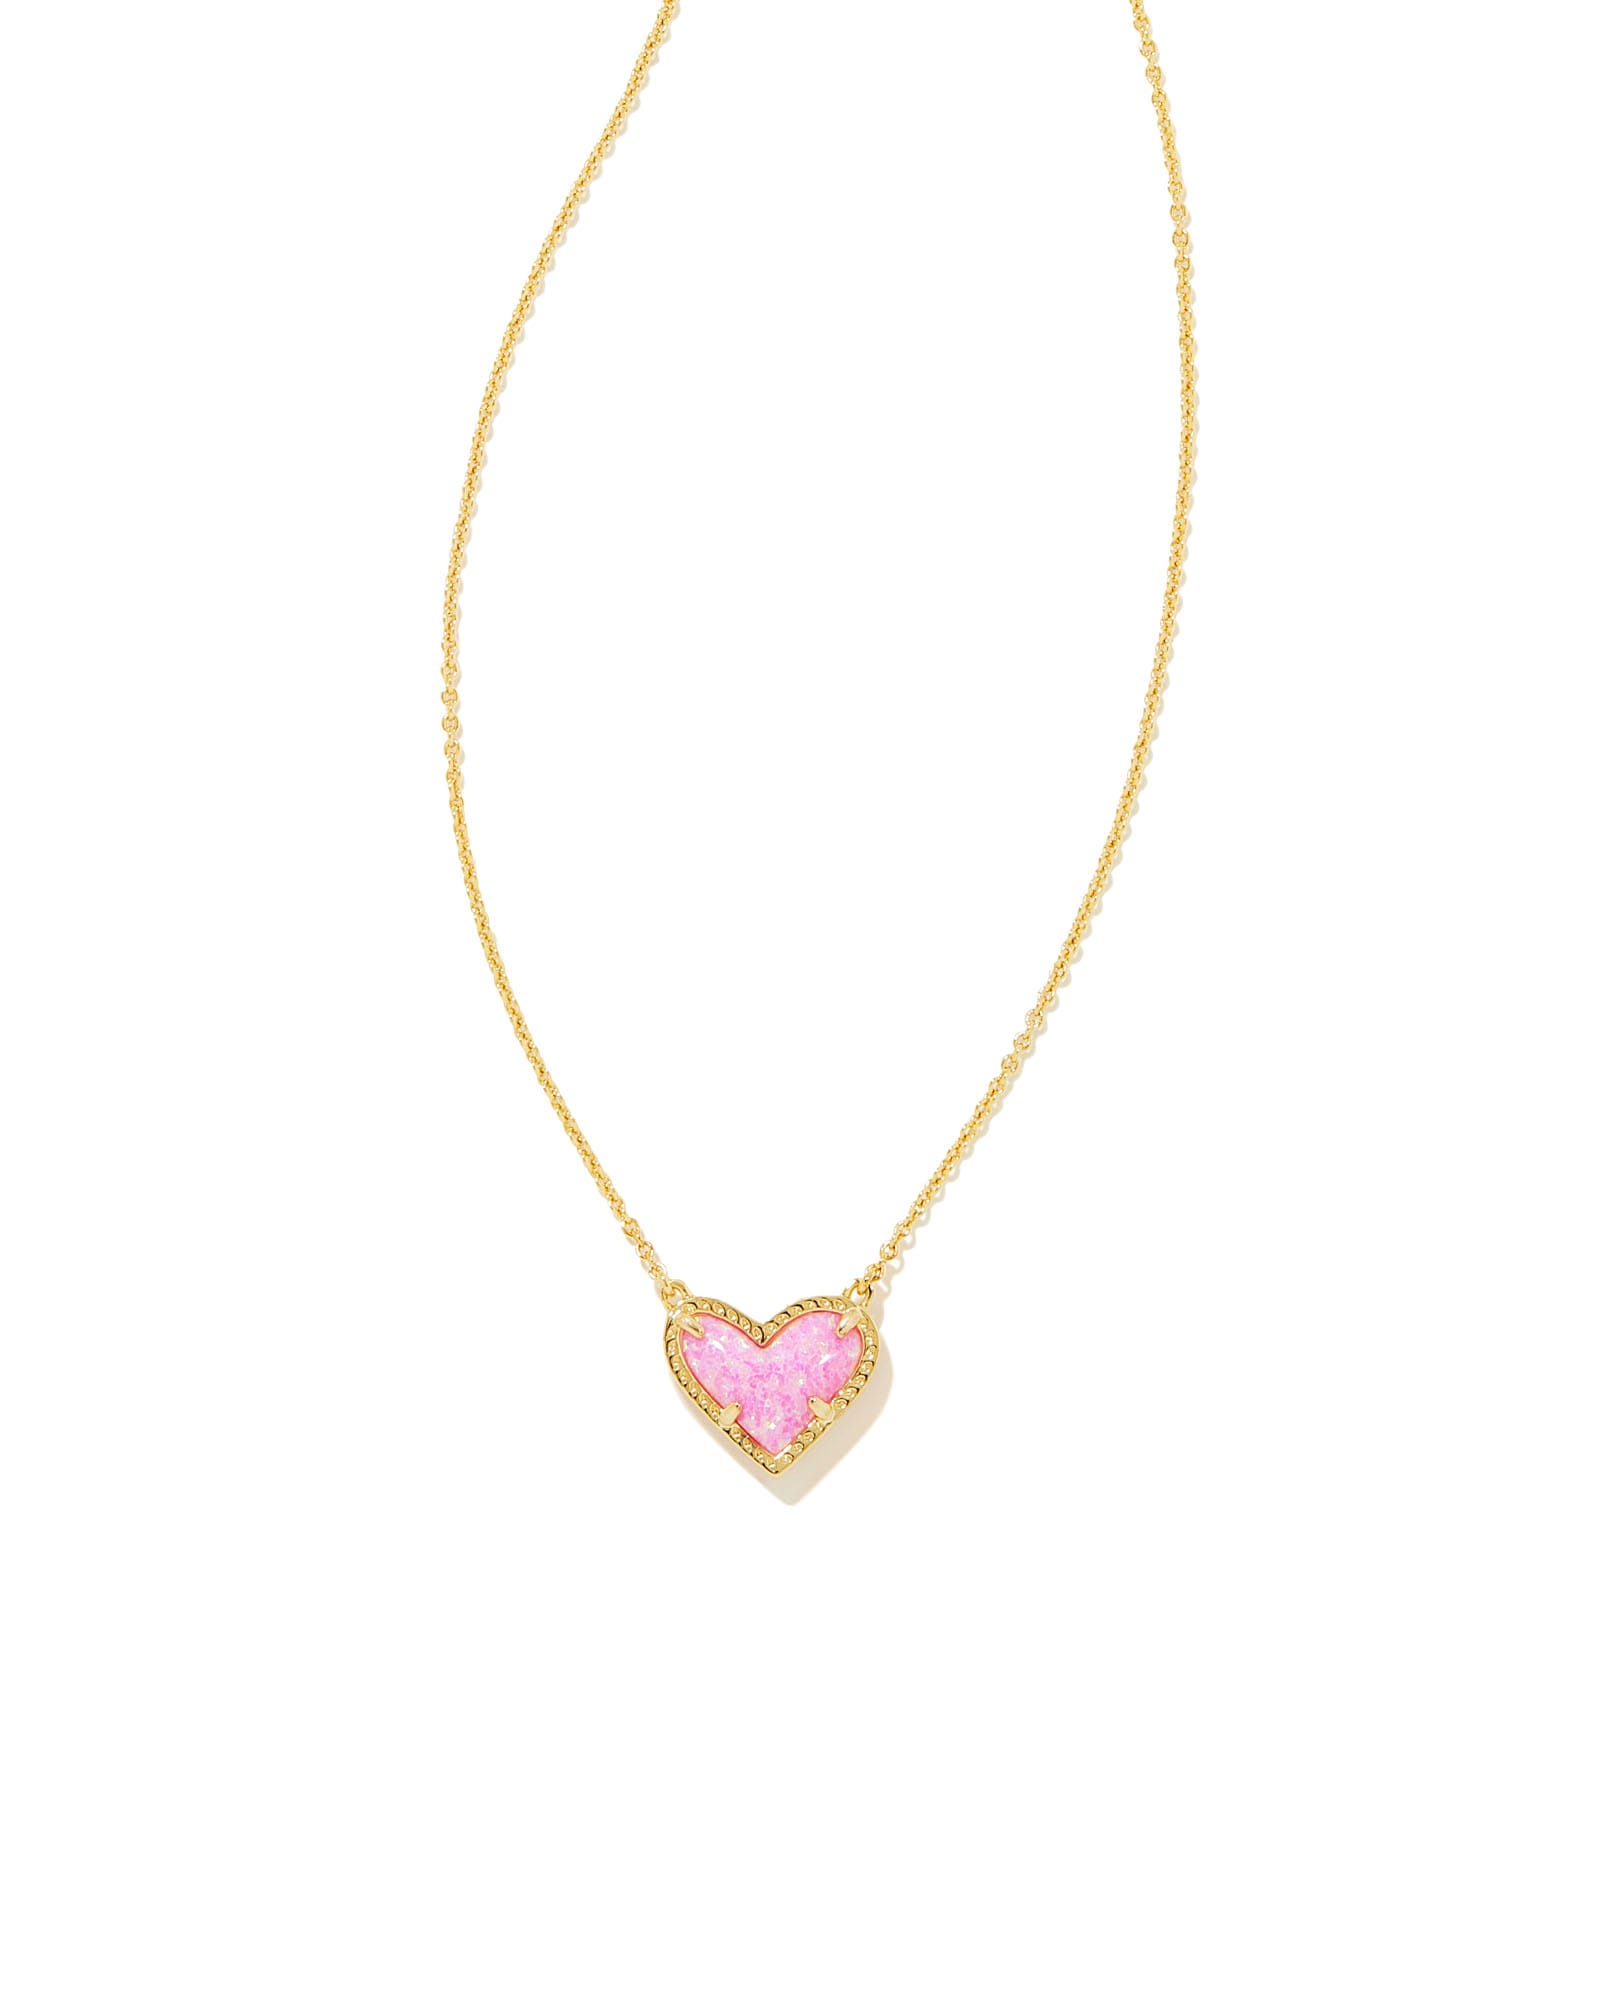 Ari Heart Rose Gold Huggie Earrings in Pink Drusy | Kendra Scott